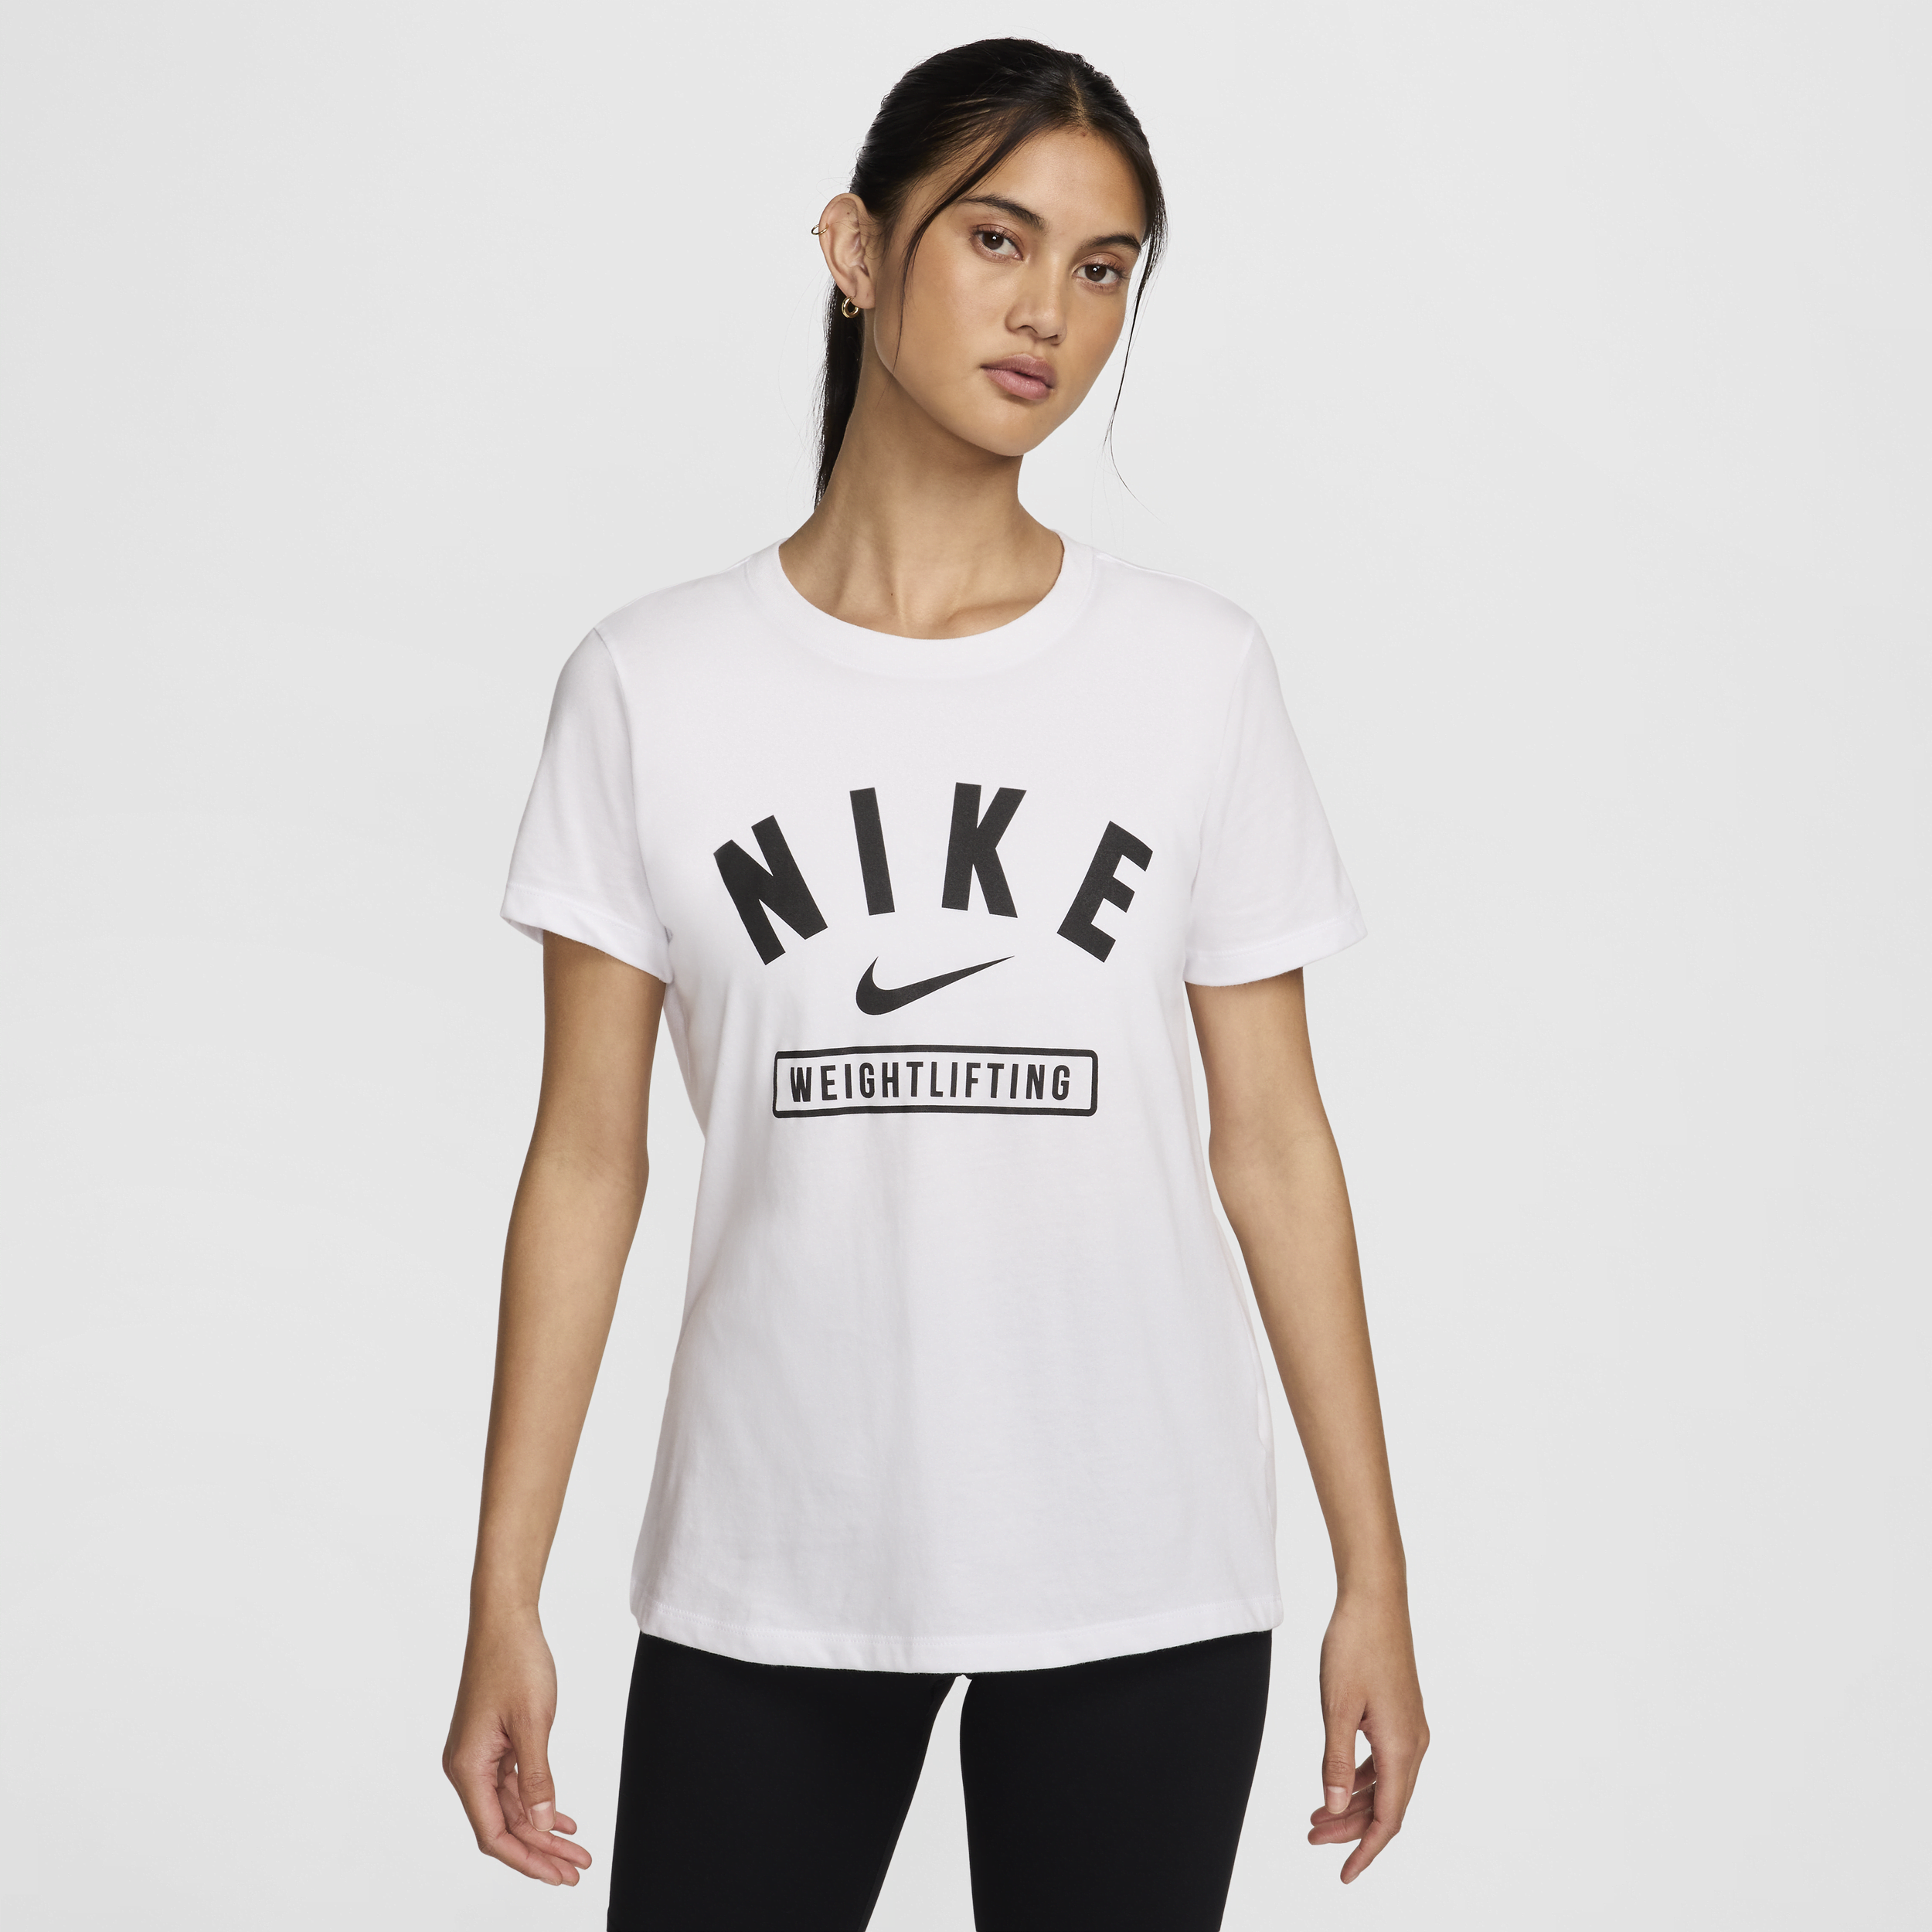 Nike Women's Weightlifting T-shirt In White